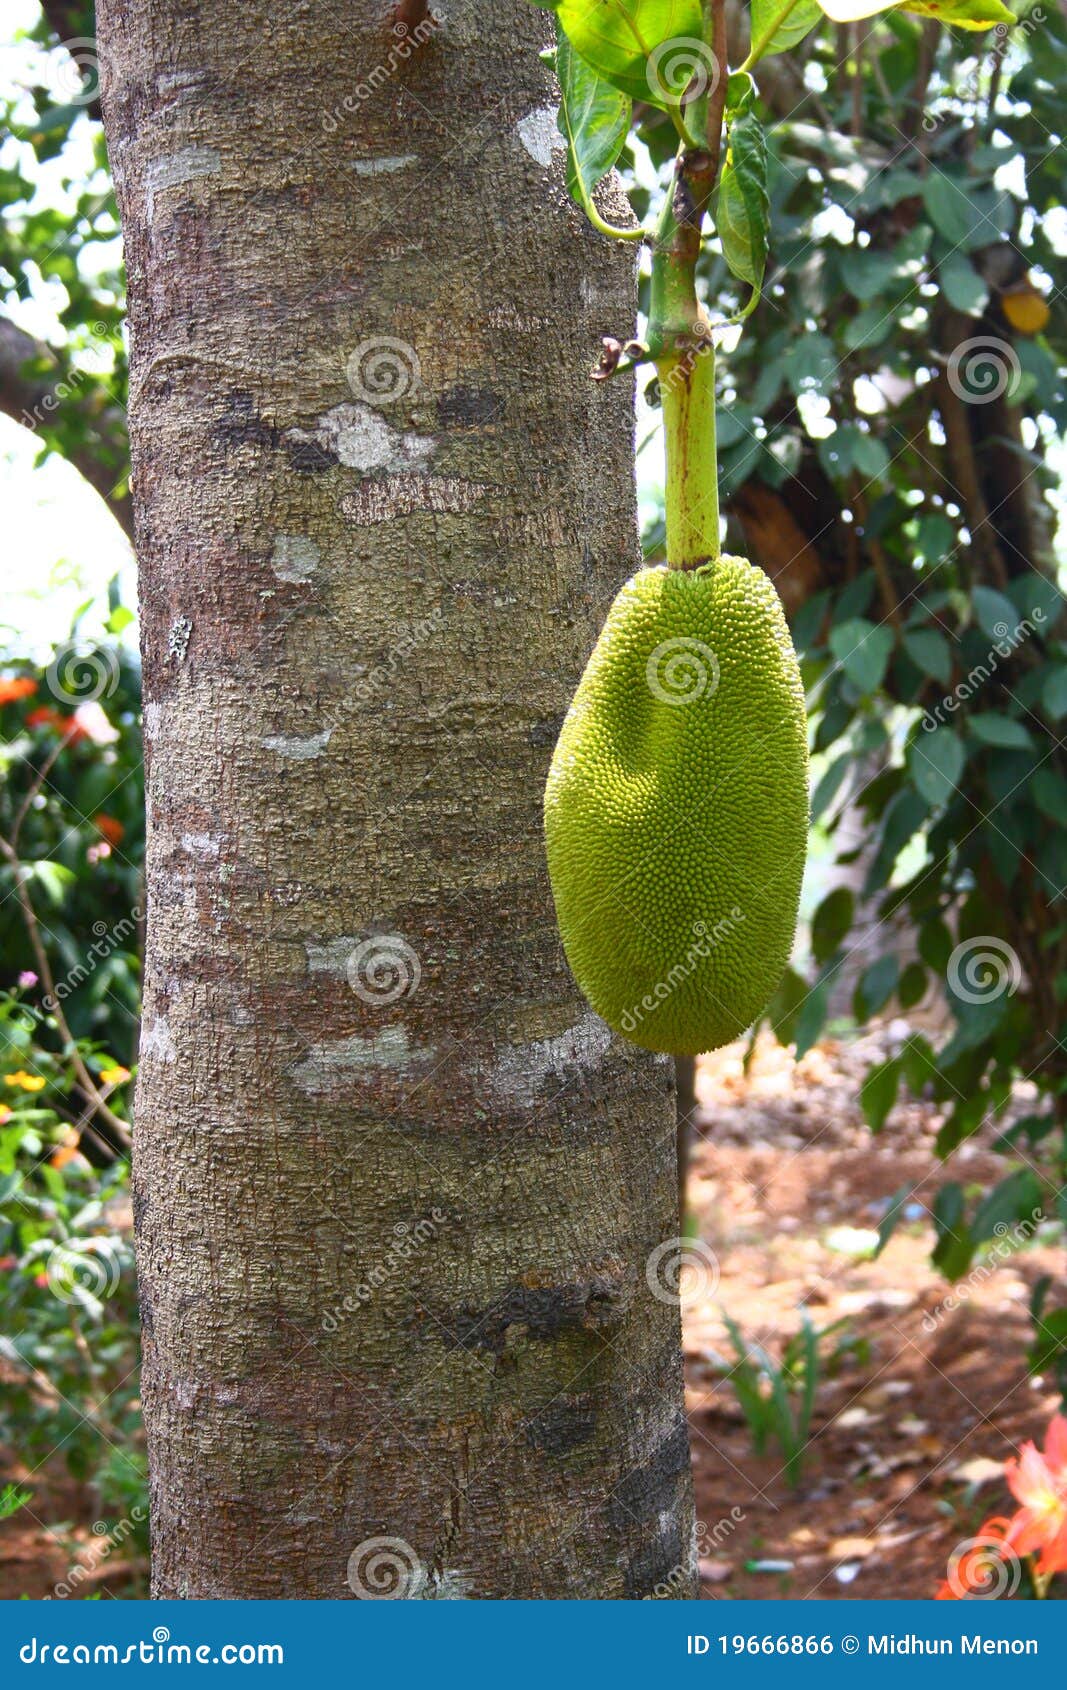 jackfruit tree with fruit